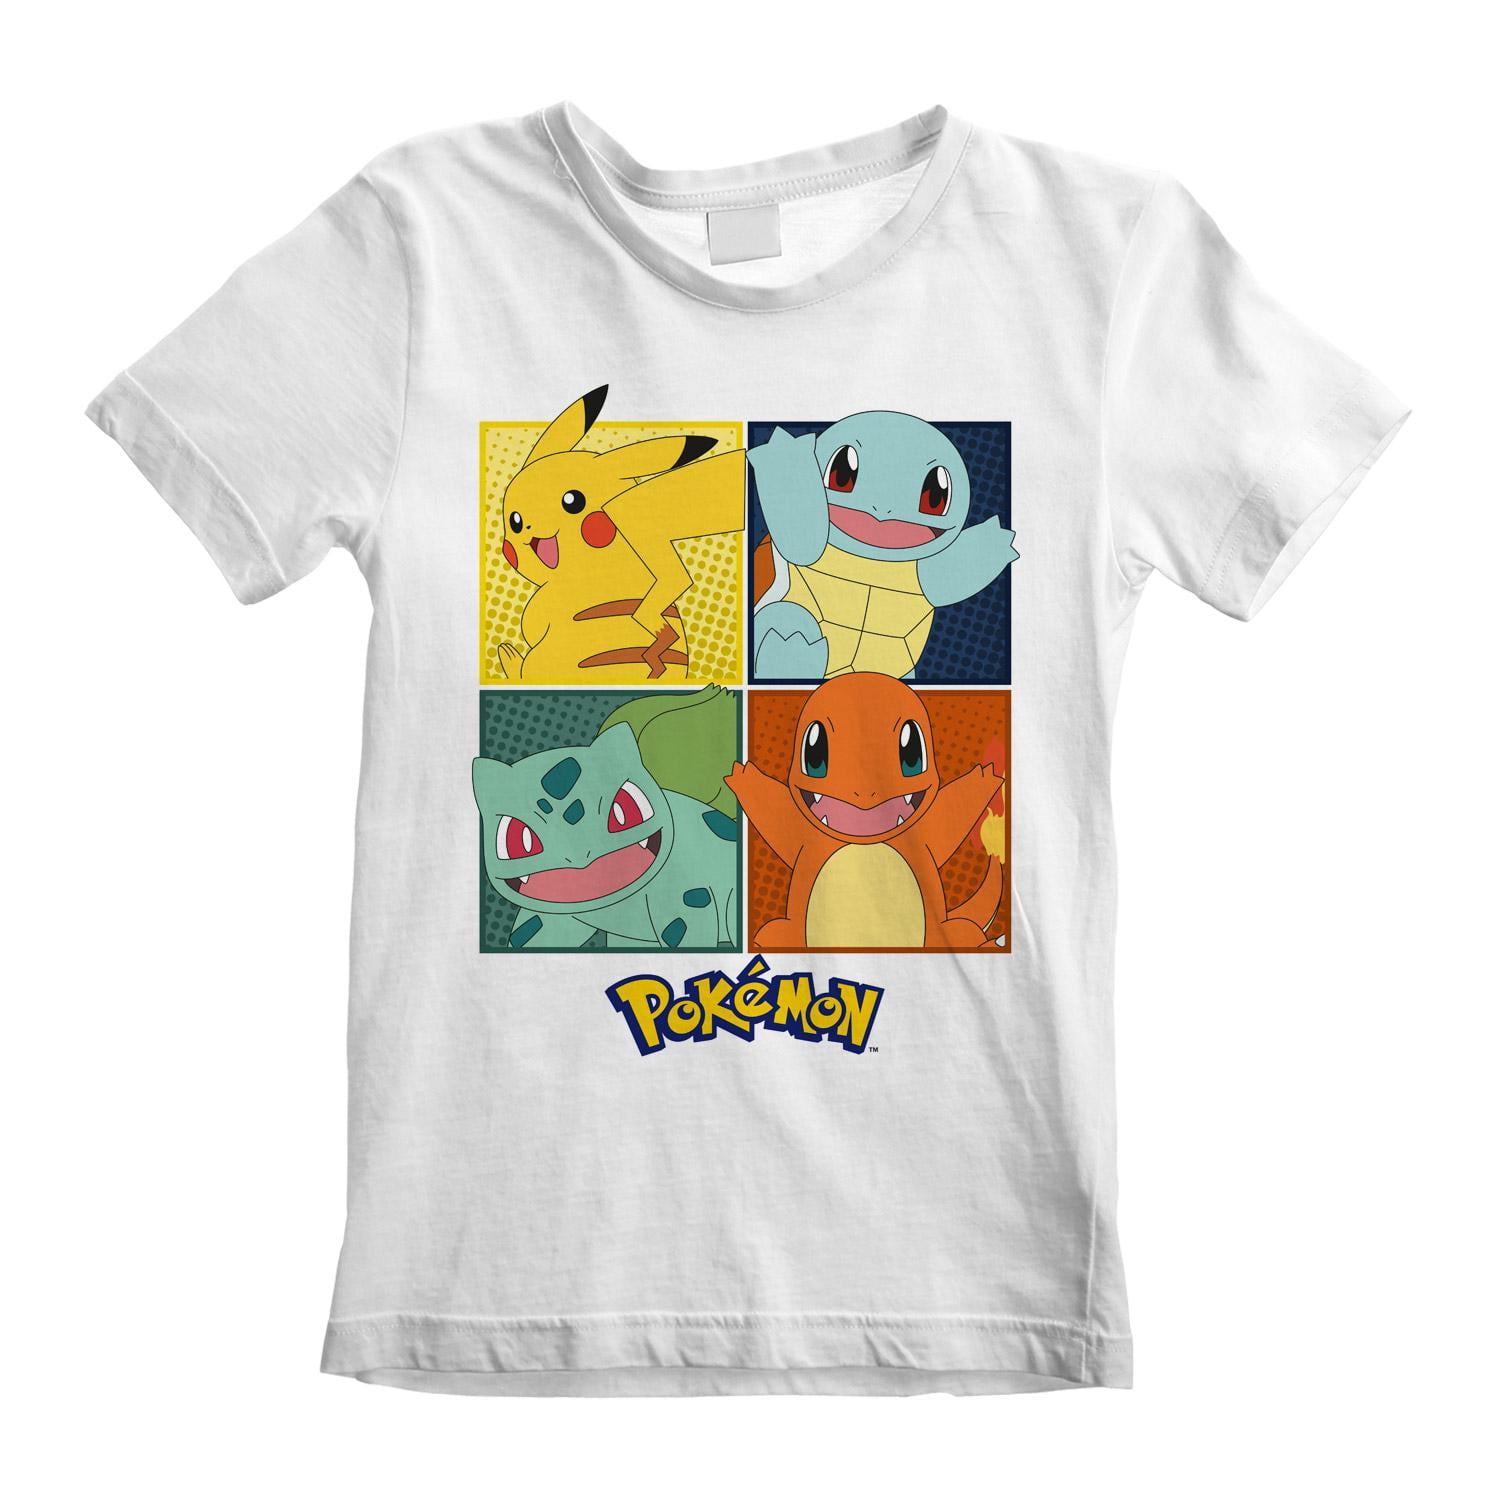 Buy > pokemon shirt for kids > in stock